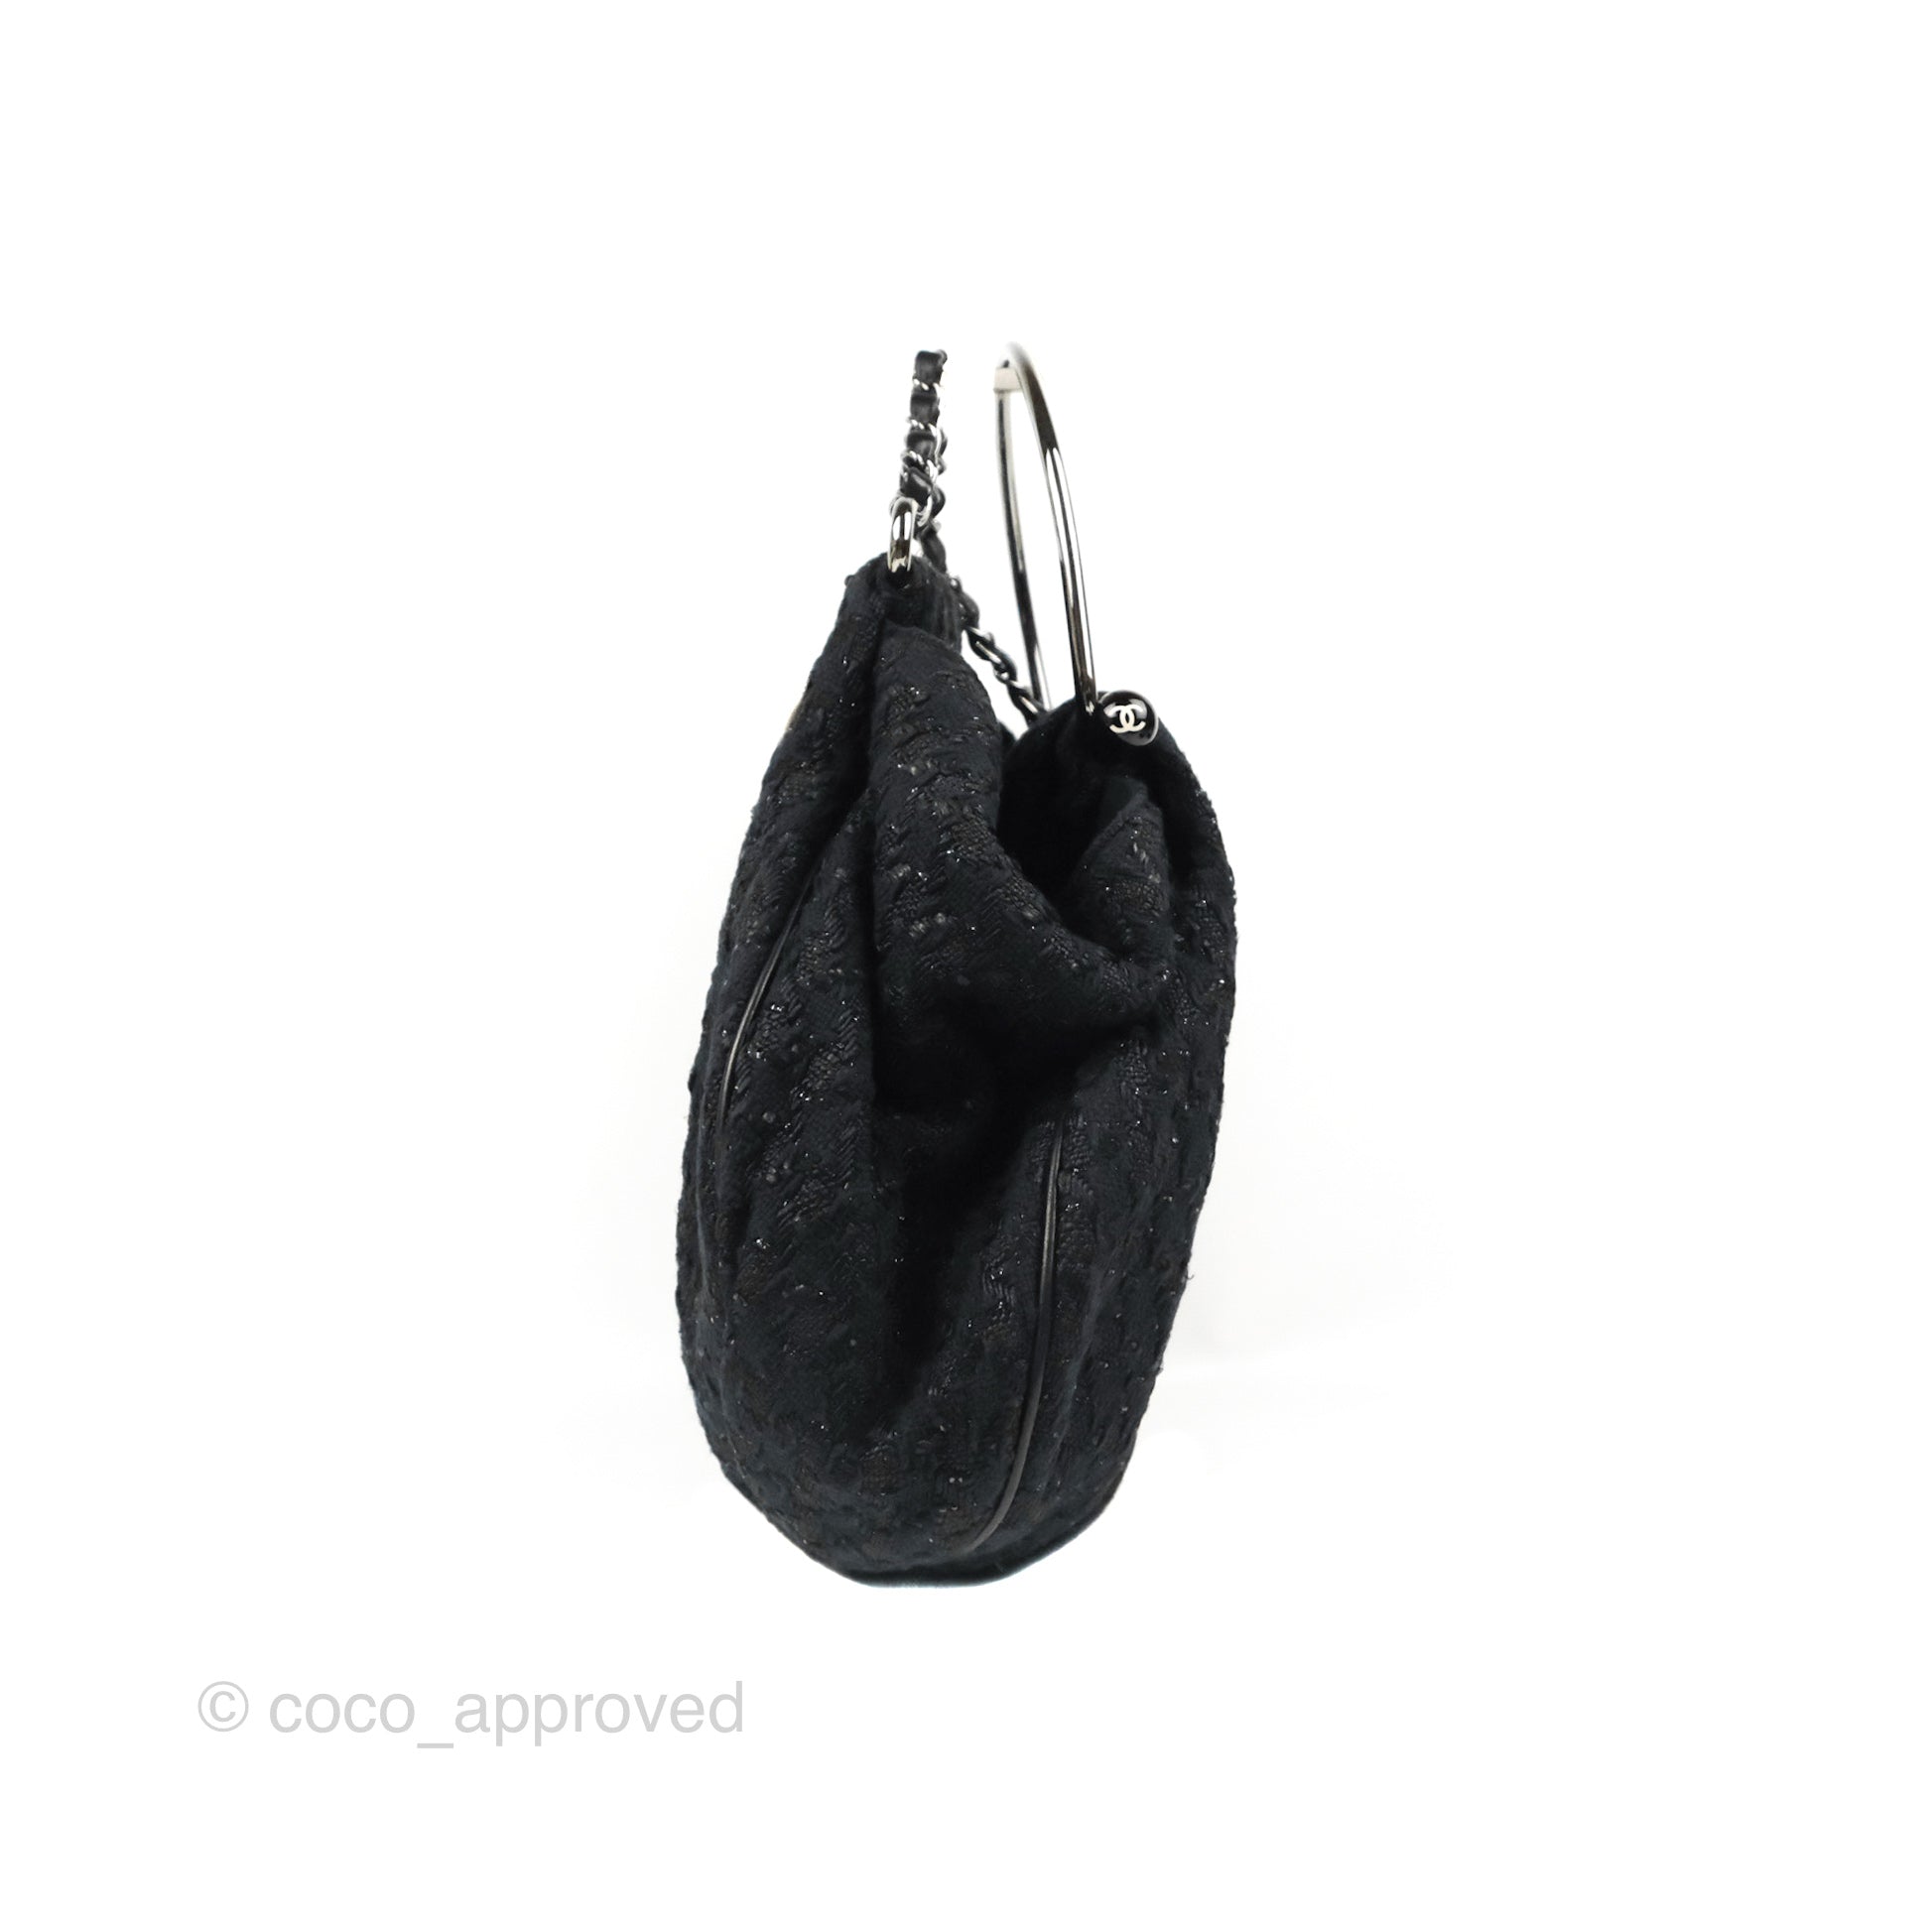 Sold at Auction: Chanel Denim XL Coco Cabas Tote Shoulder Bag Purse